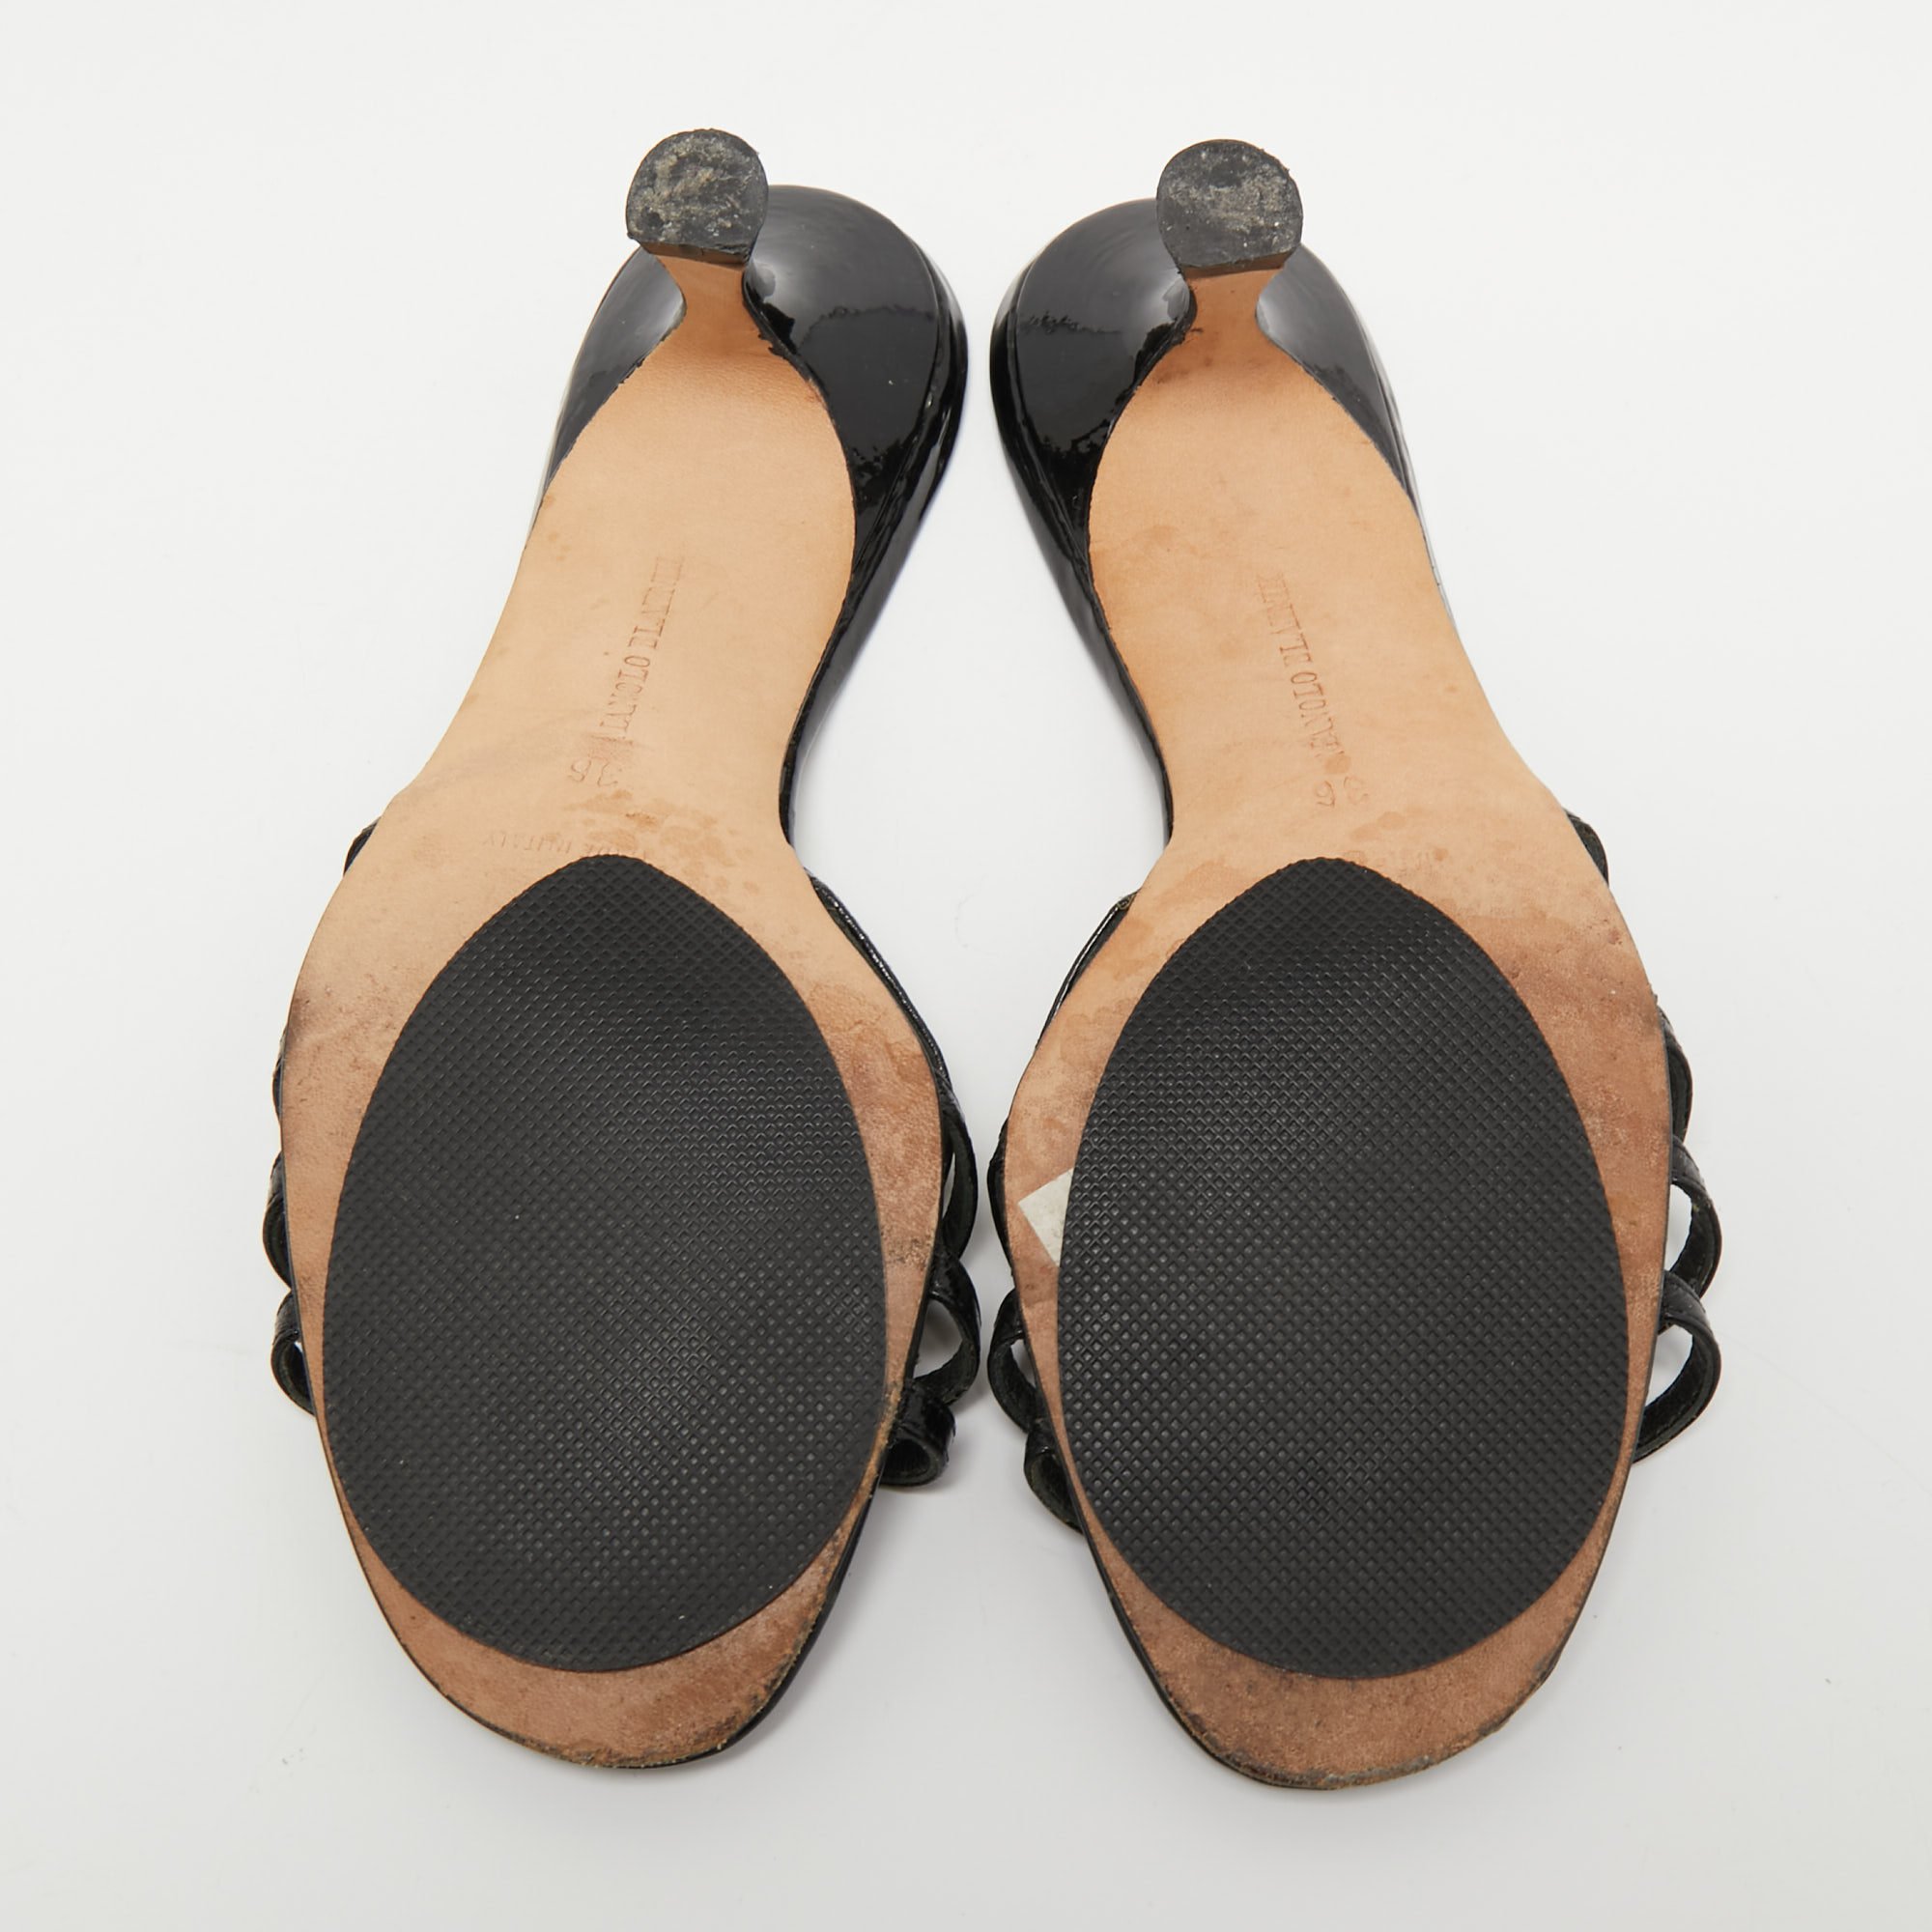 Manolo Blahnik Black Patent Leather Strappy Slide Sandals Size 36